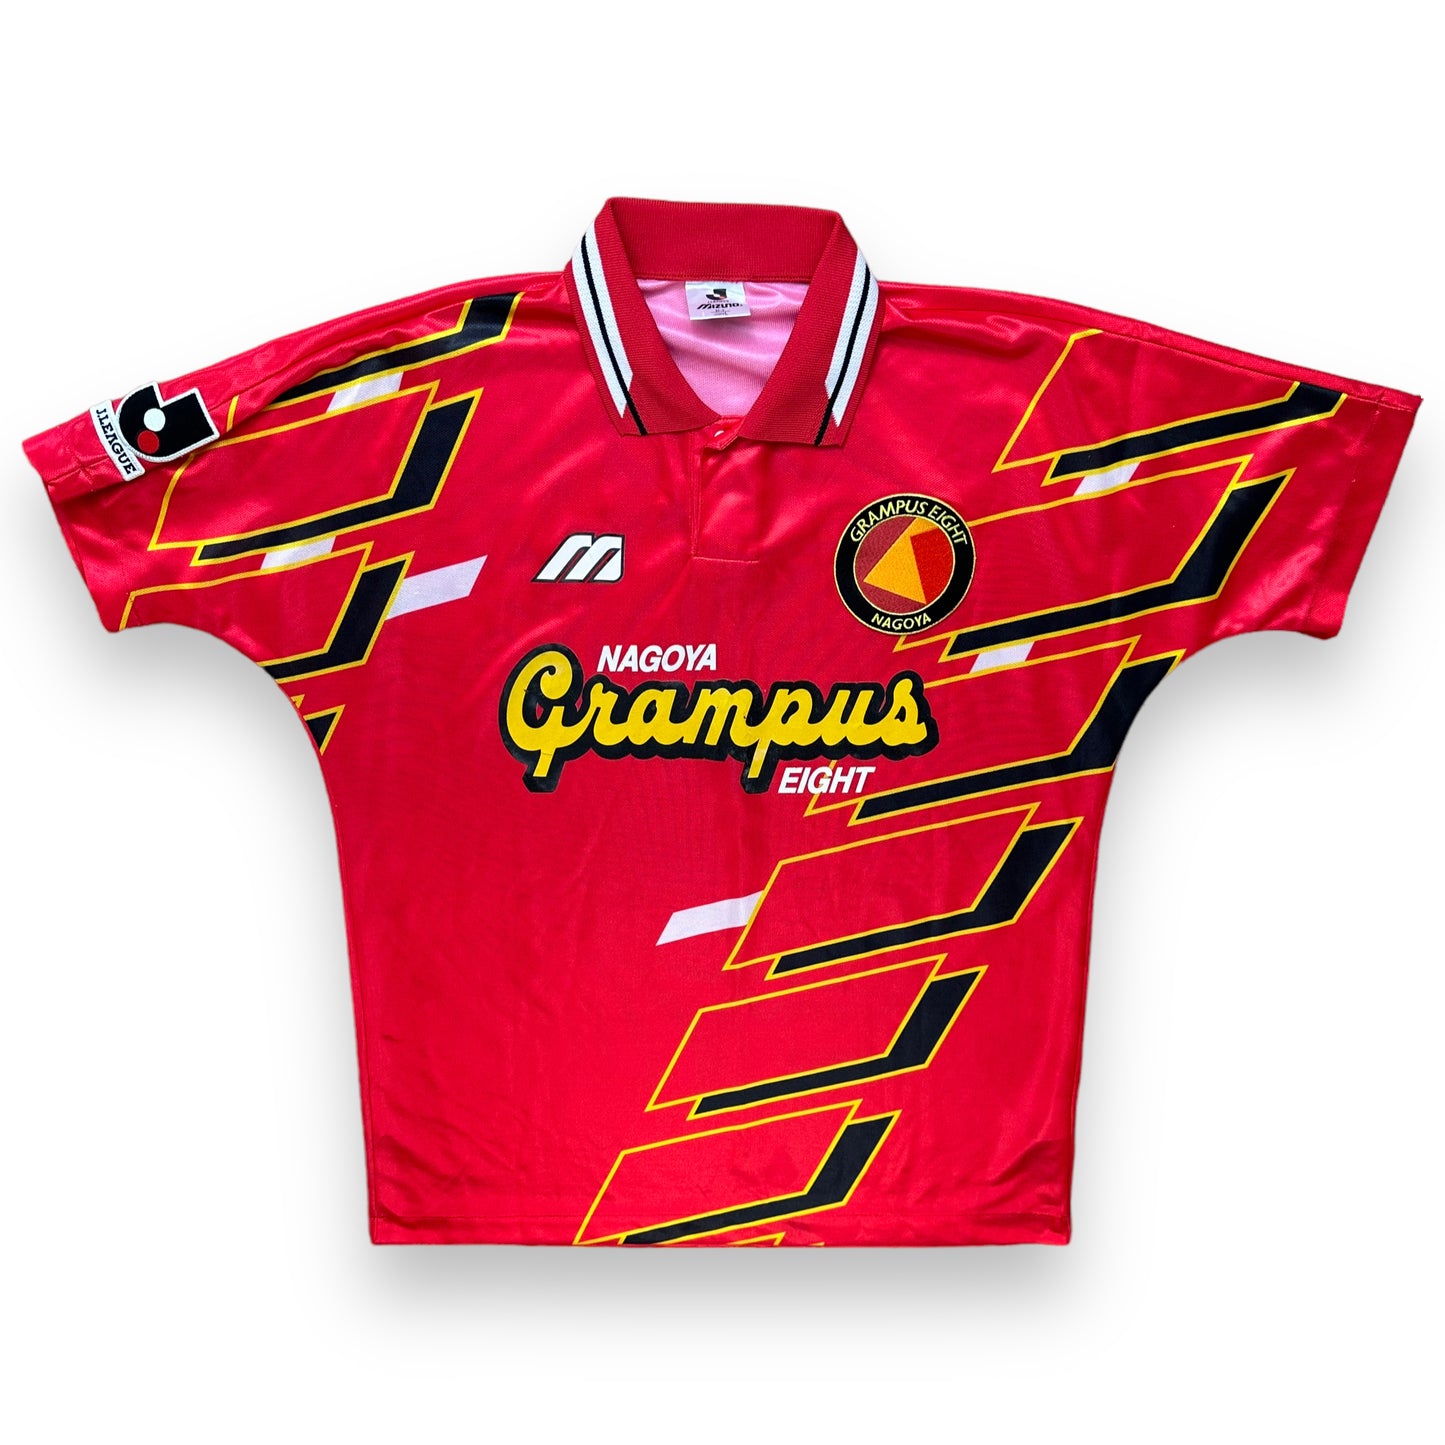 Nagoya Grampus 1995-96 Home Shirt (M)